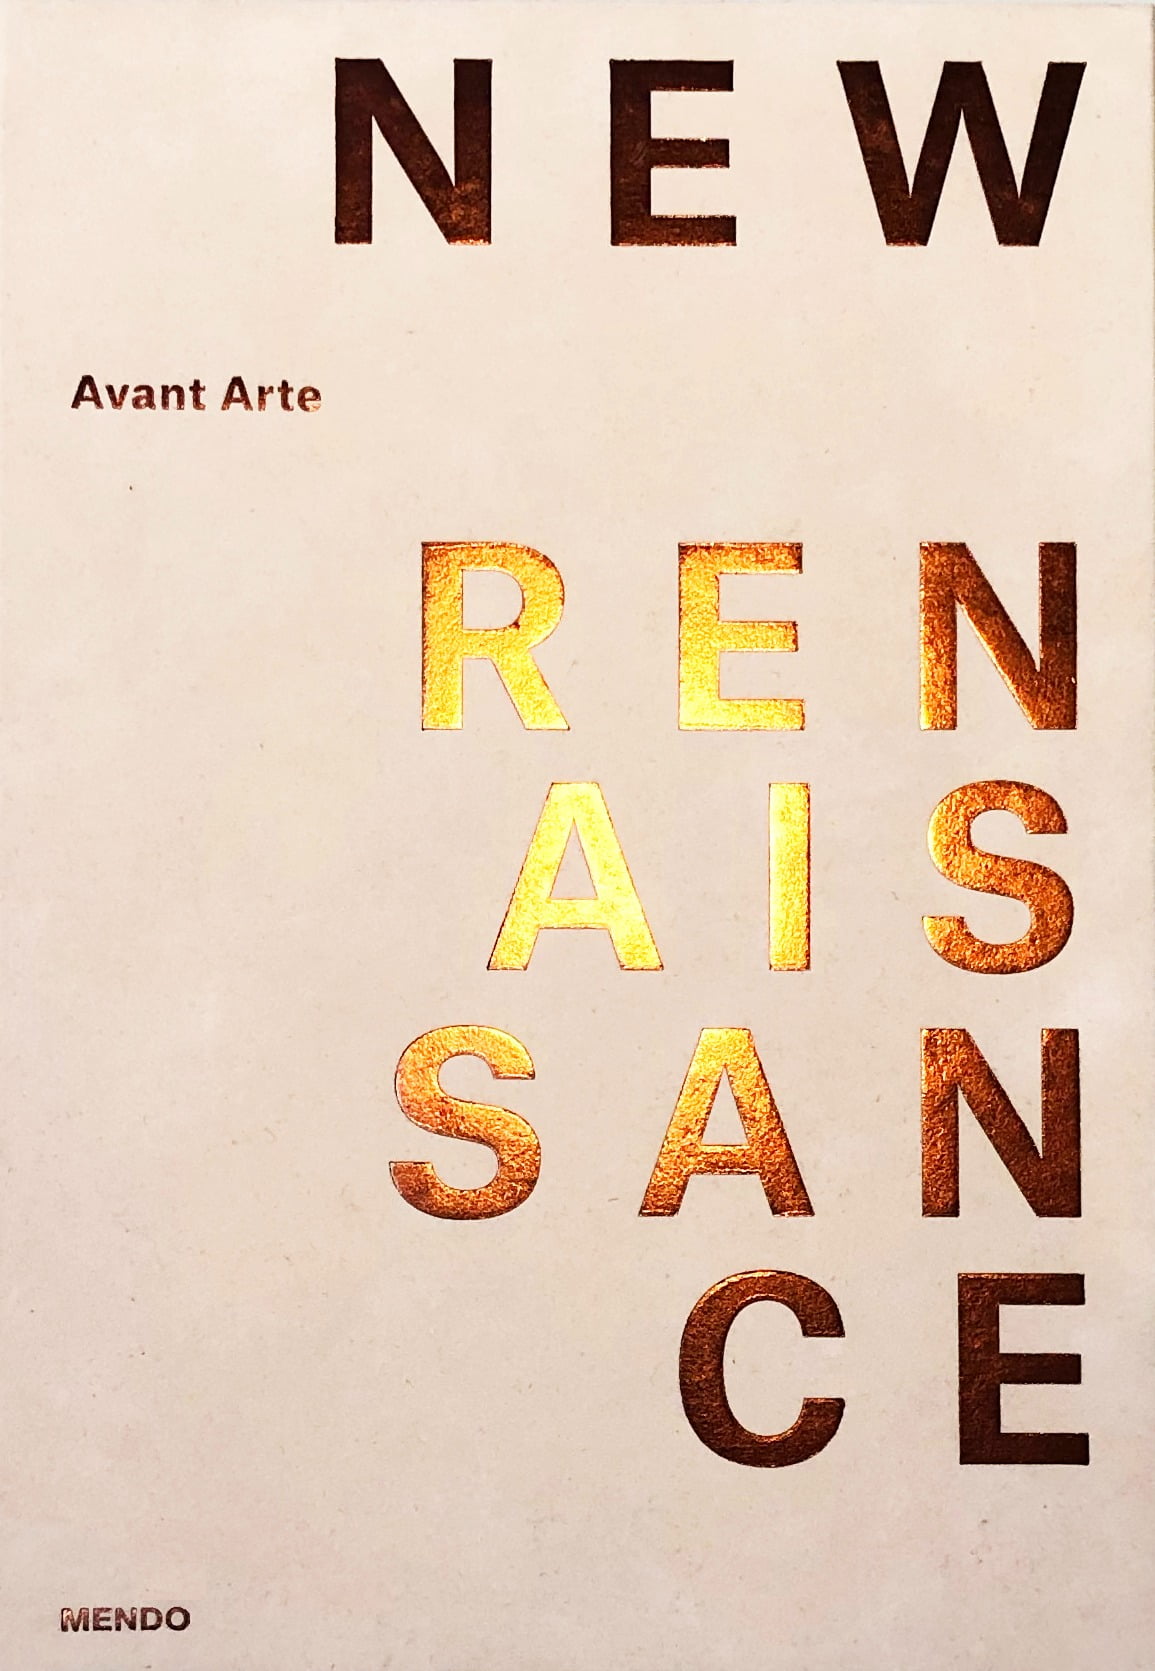 Avant Arte: New Renaissance